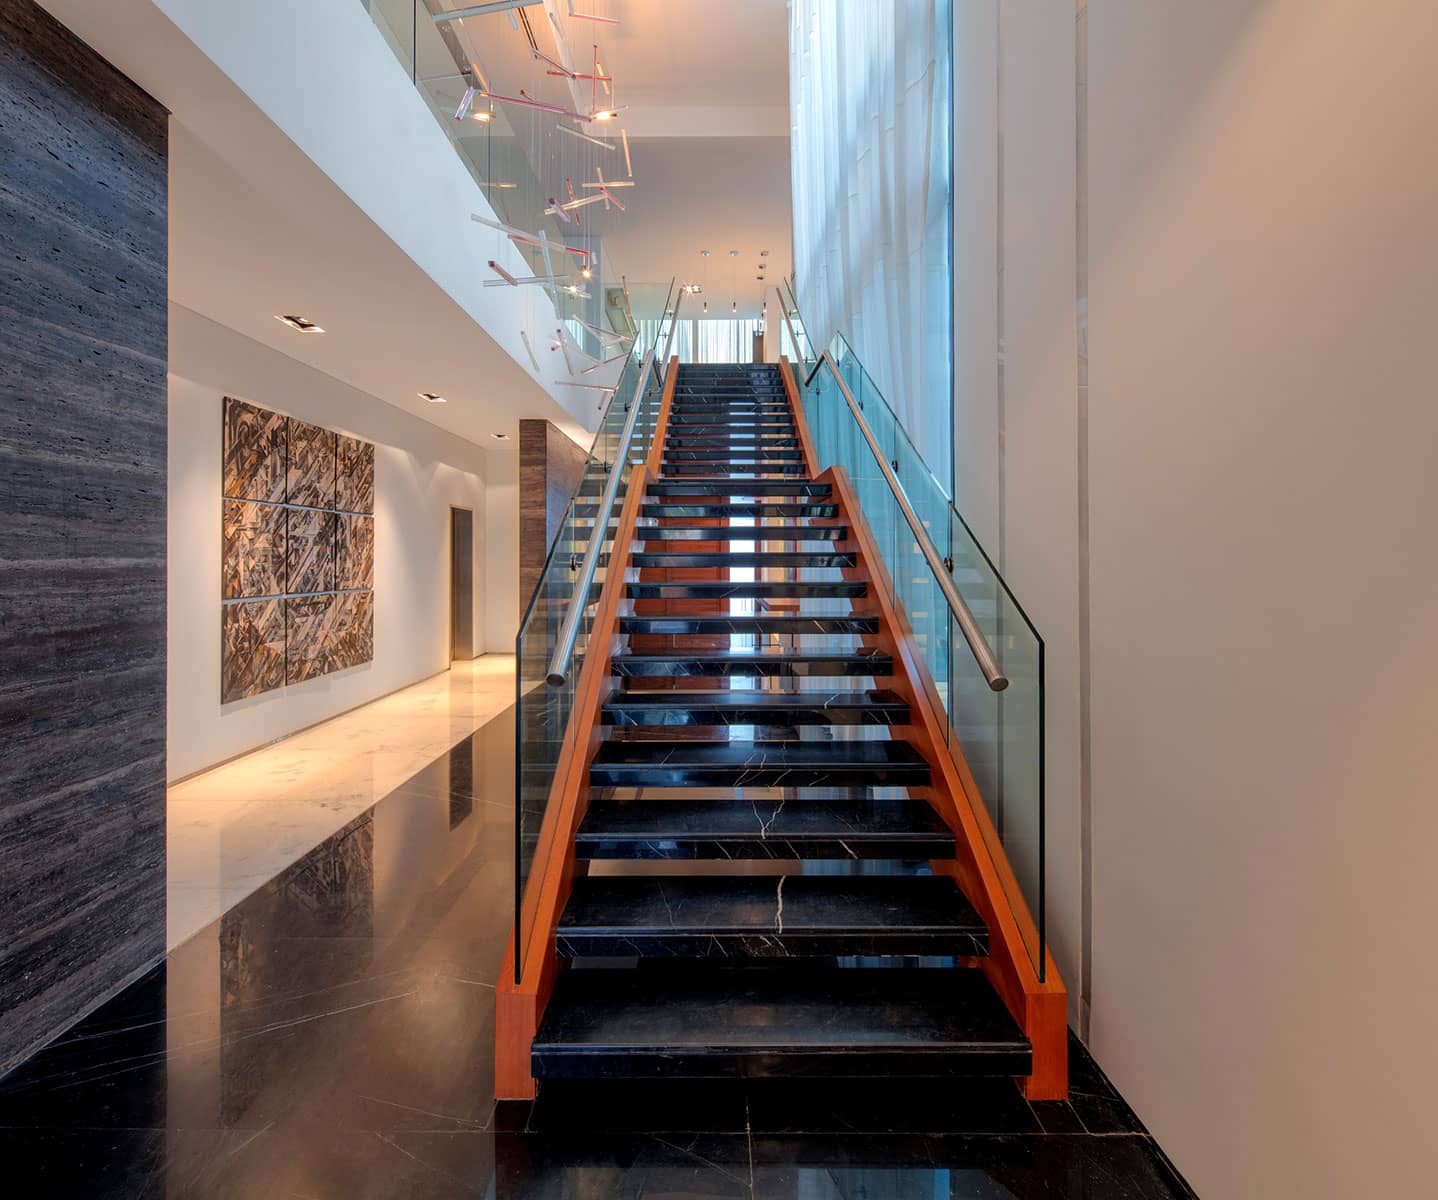 Architecture Photography: Contemporary Staircase & hallway of private villa Dubai